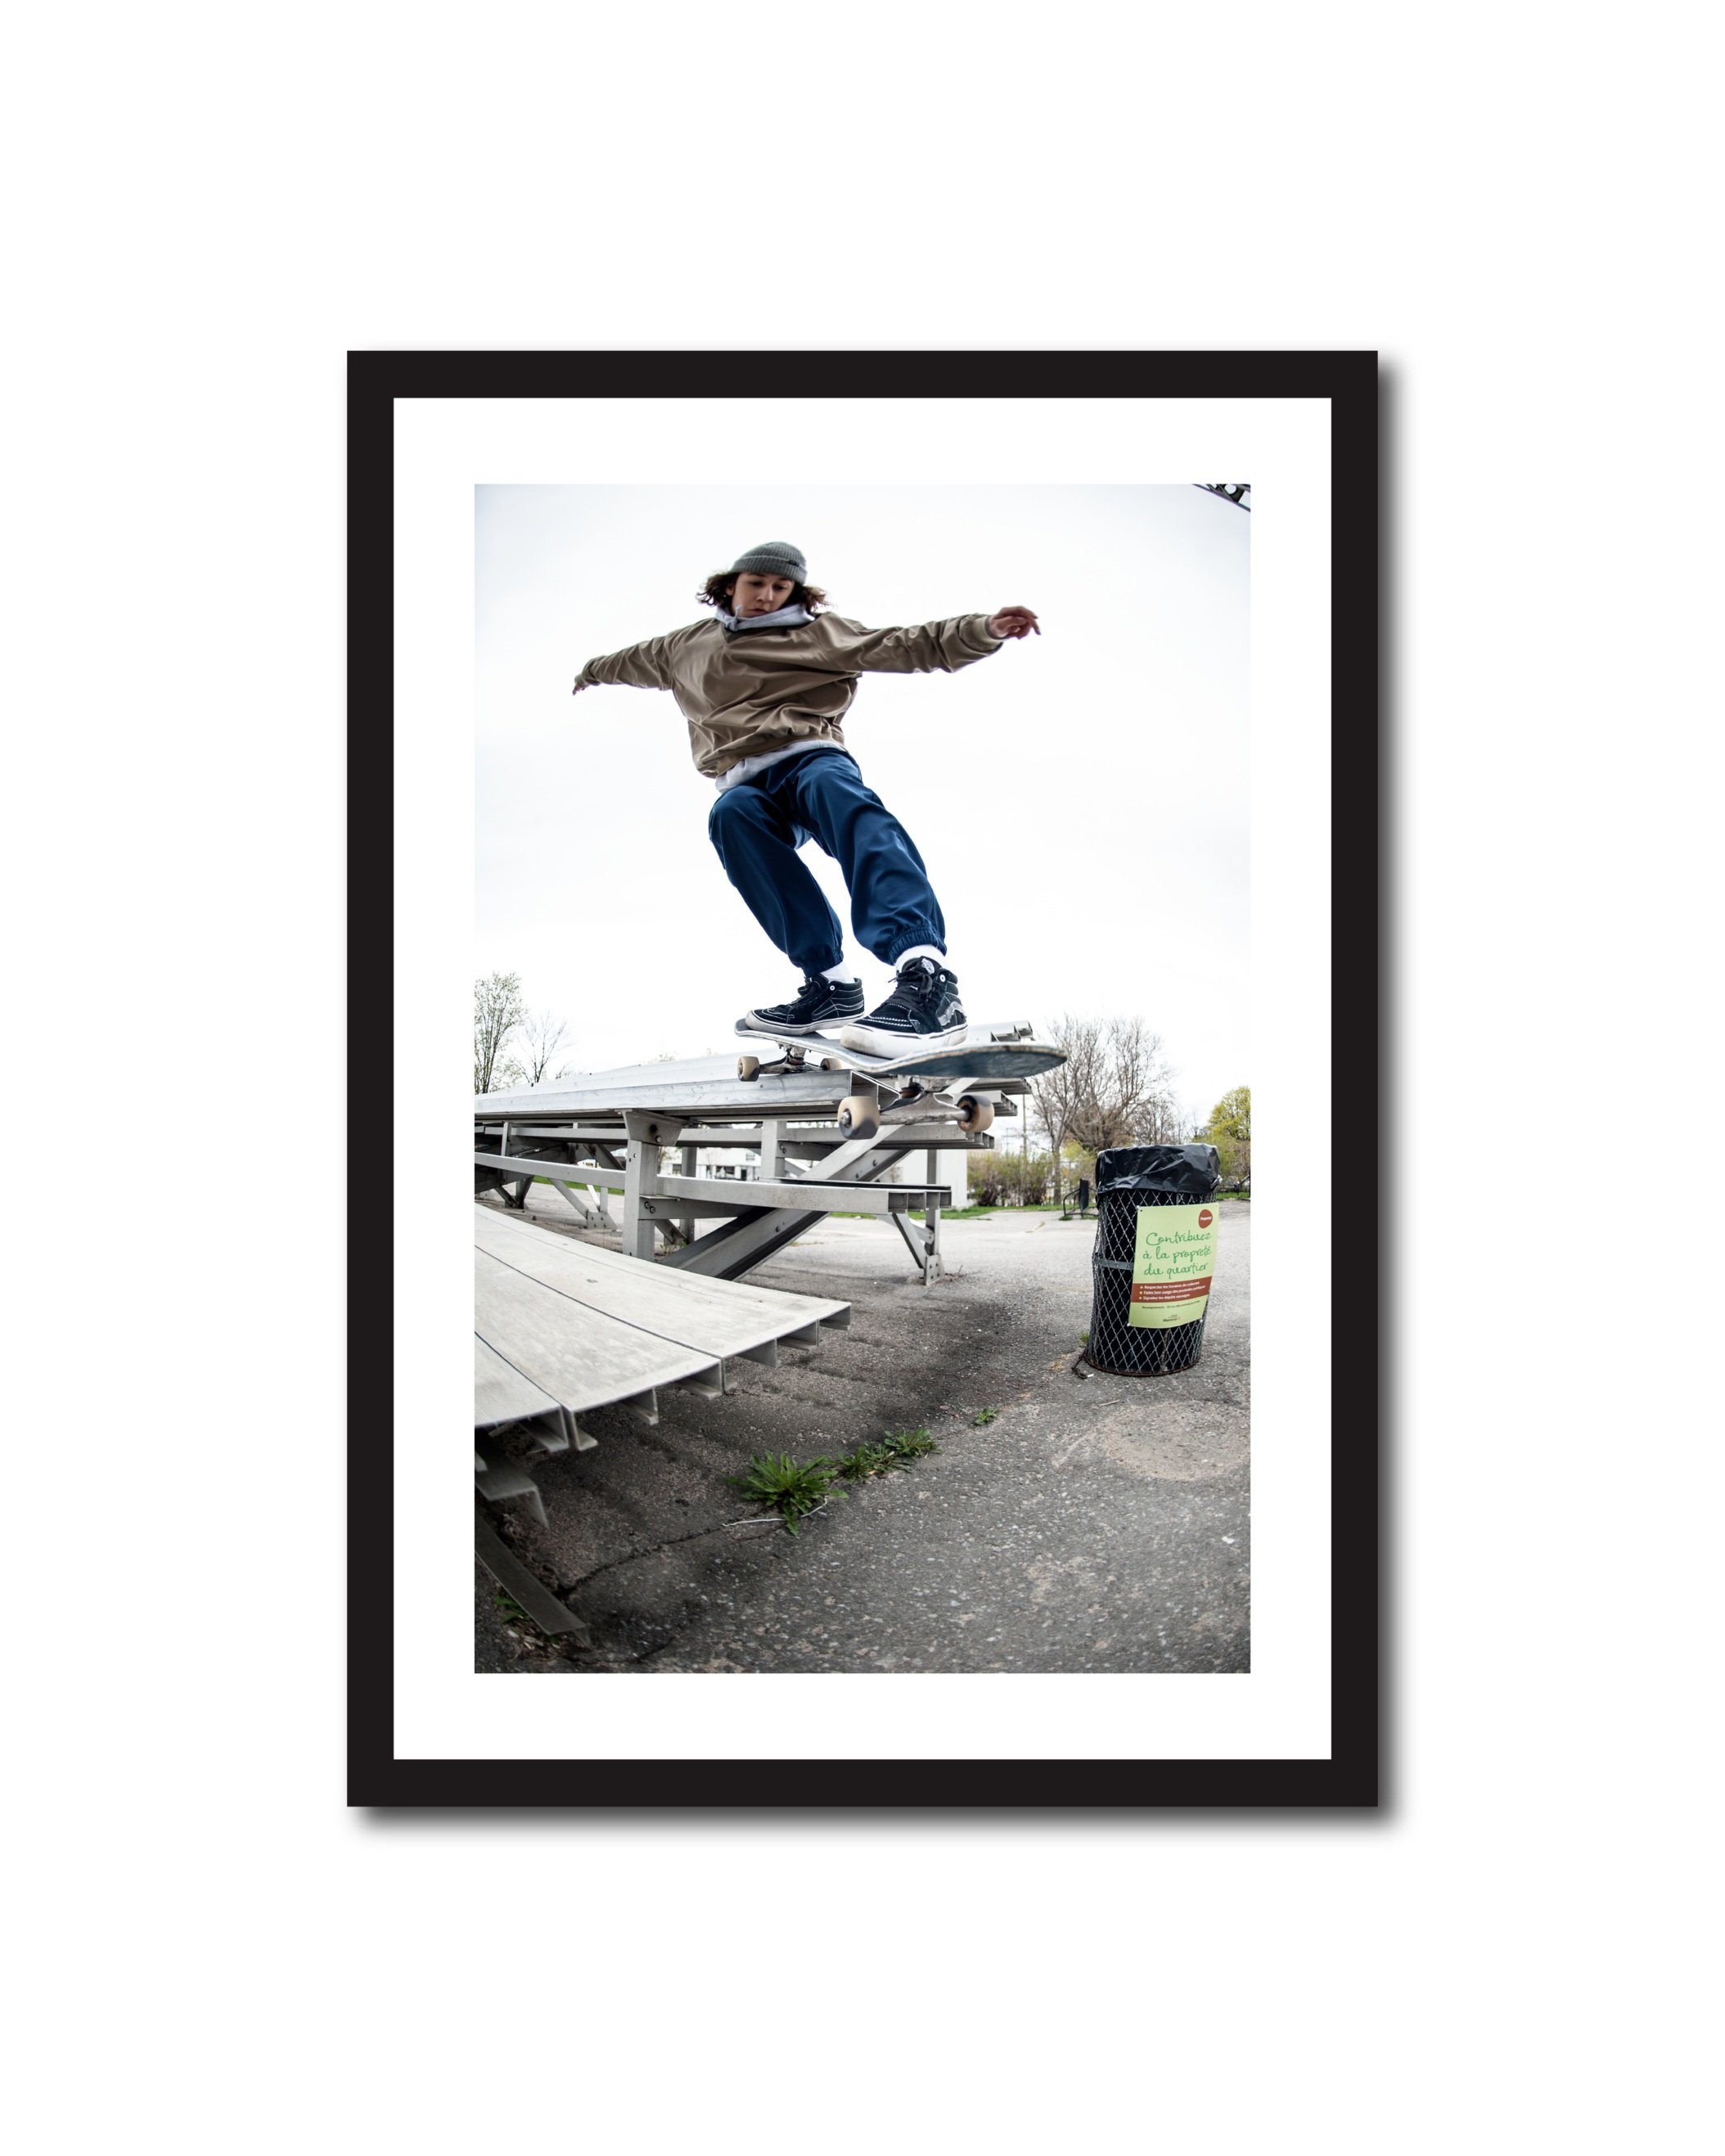 Skateboard+series+07-02.jpg